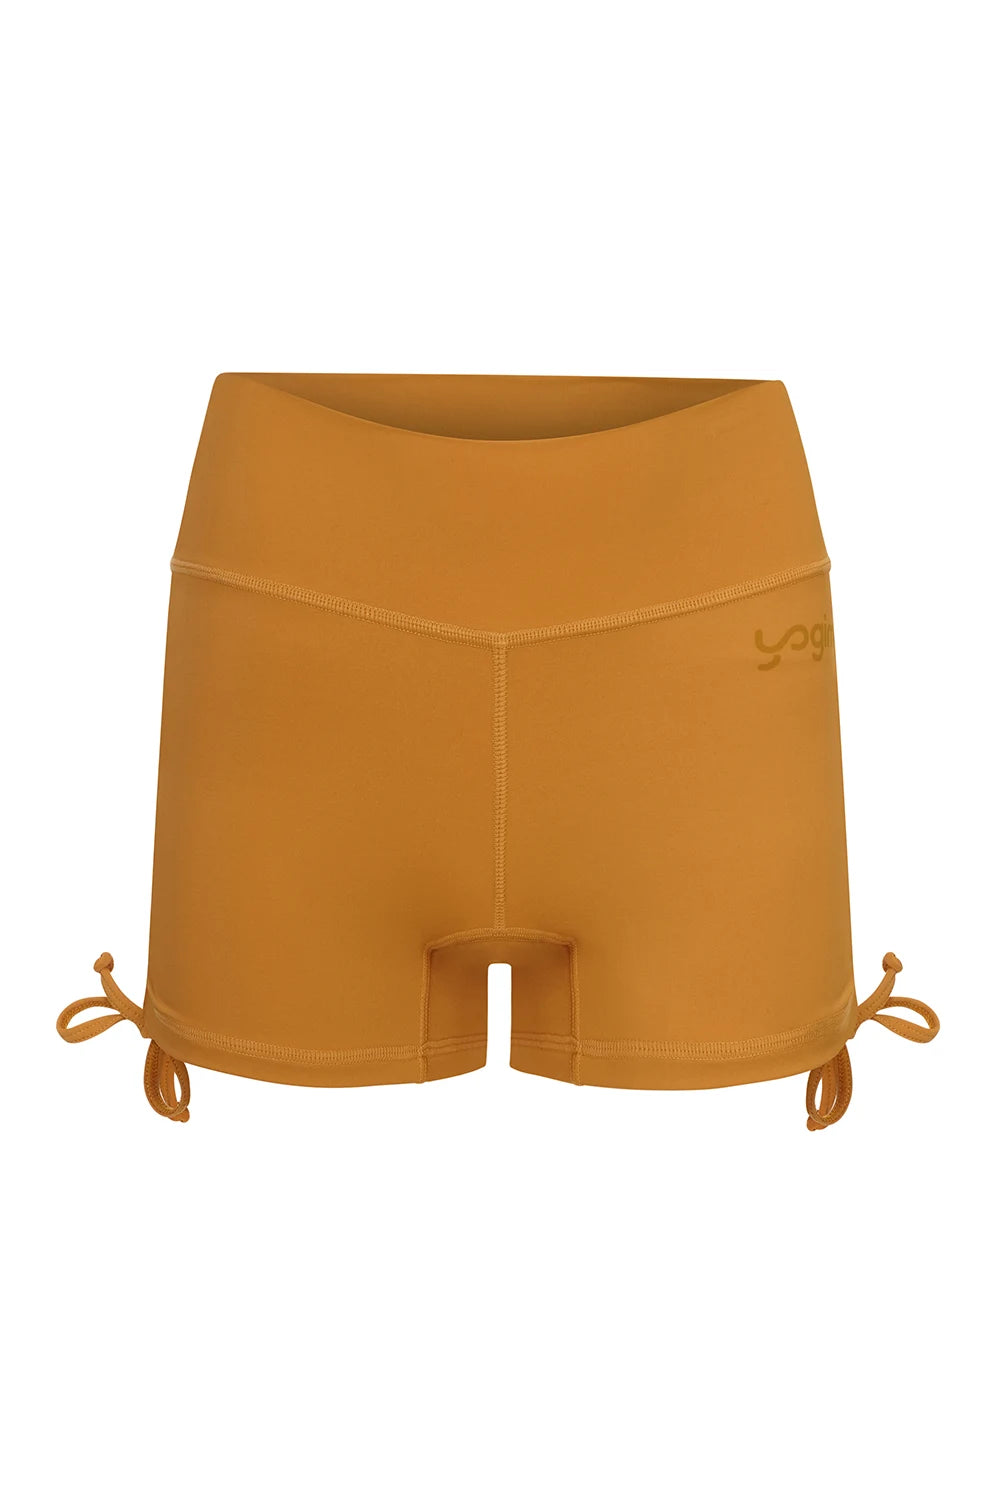 Compra tus shorts en Yogimi. Modelo Surya Inca Gold. 